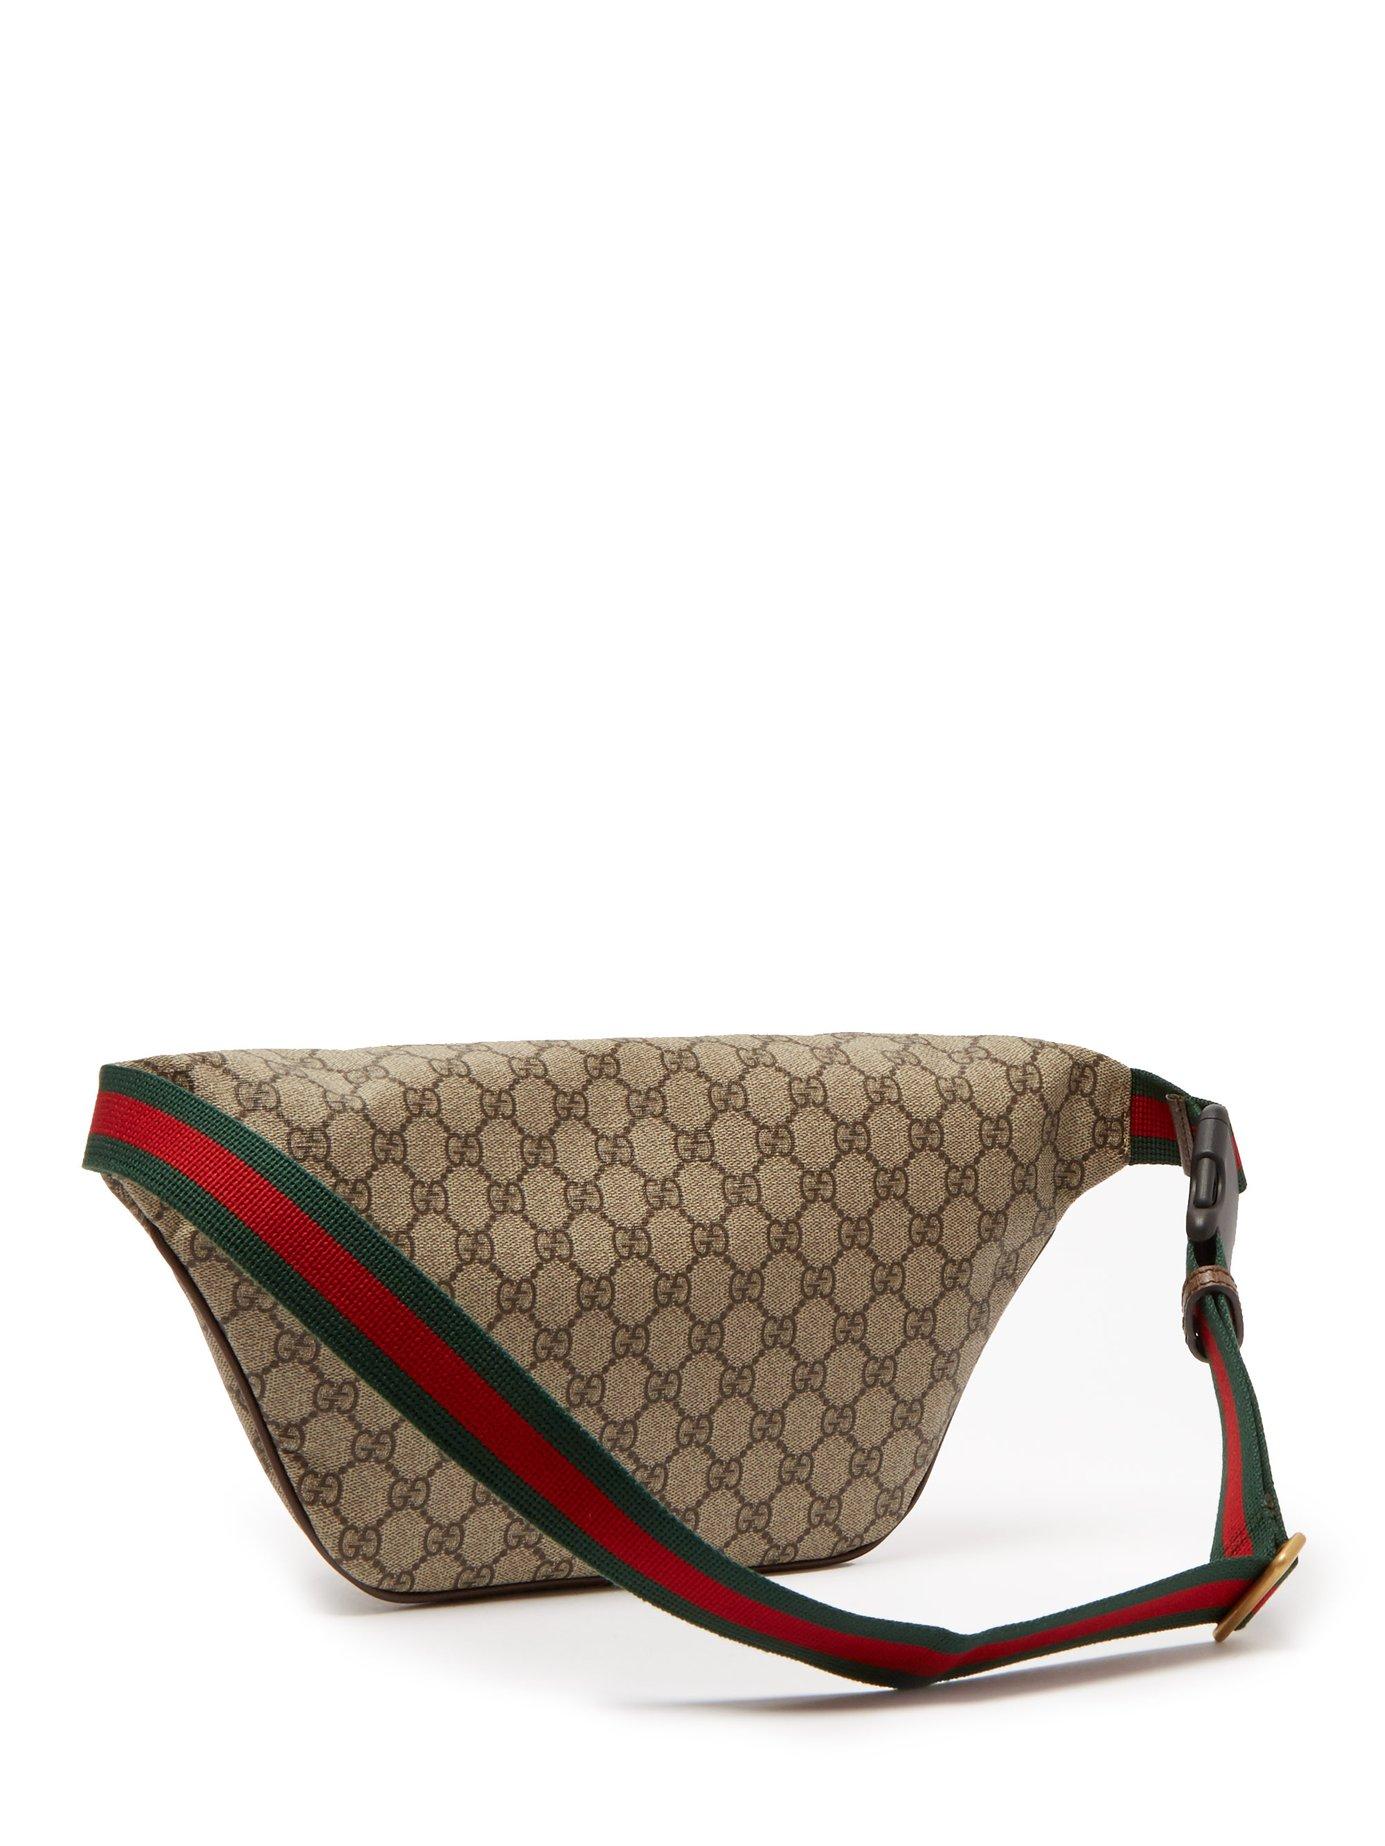 Gucci Gg Supreme Ufo Canvas Belt Bag in Brown for Men - Lyst